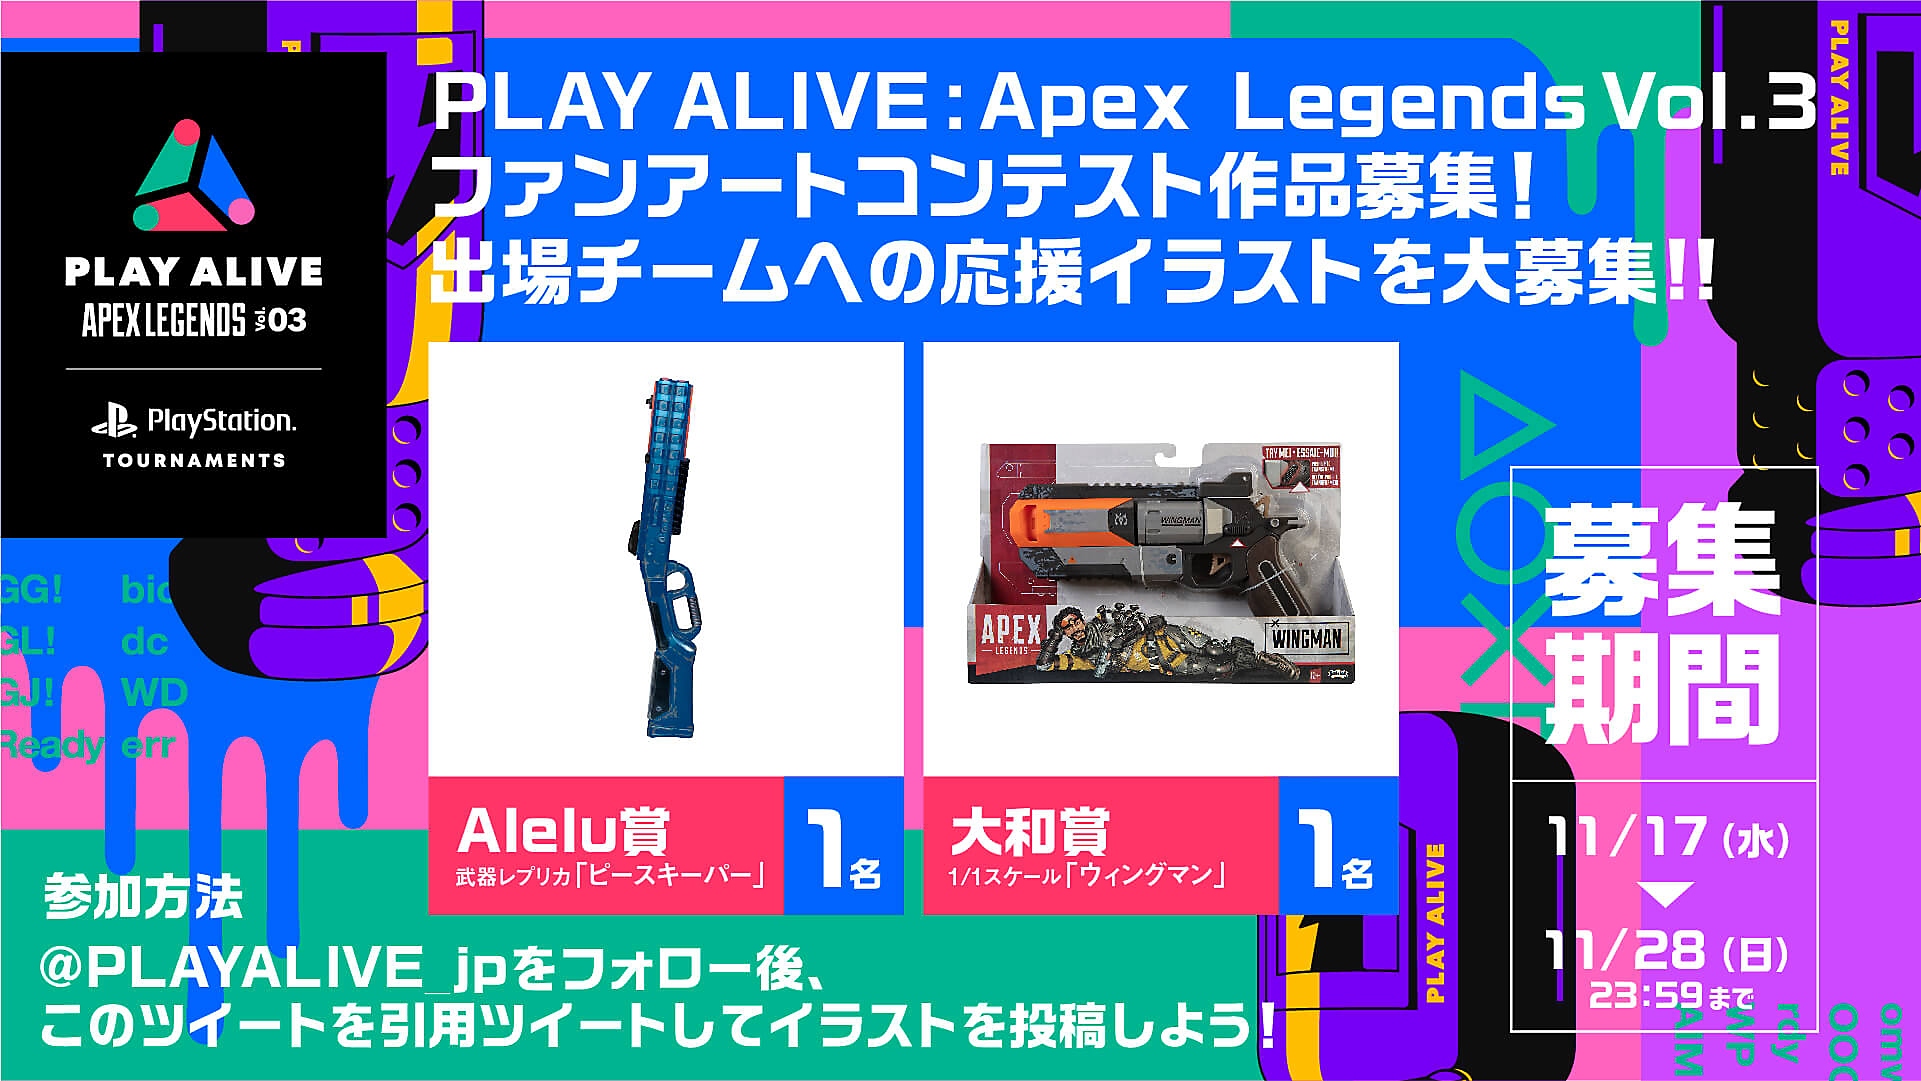 PLAY ALIVE 2021:Apex Legends Vol.3 ファンアートコンテスト作品募集! 出場チームへの応援イラストを大募集!!